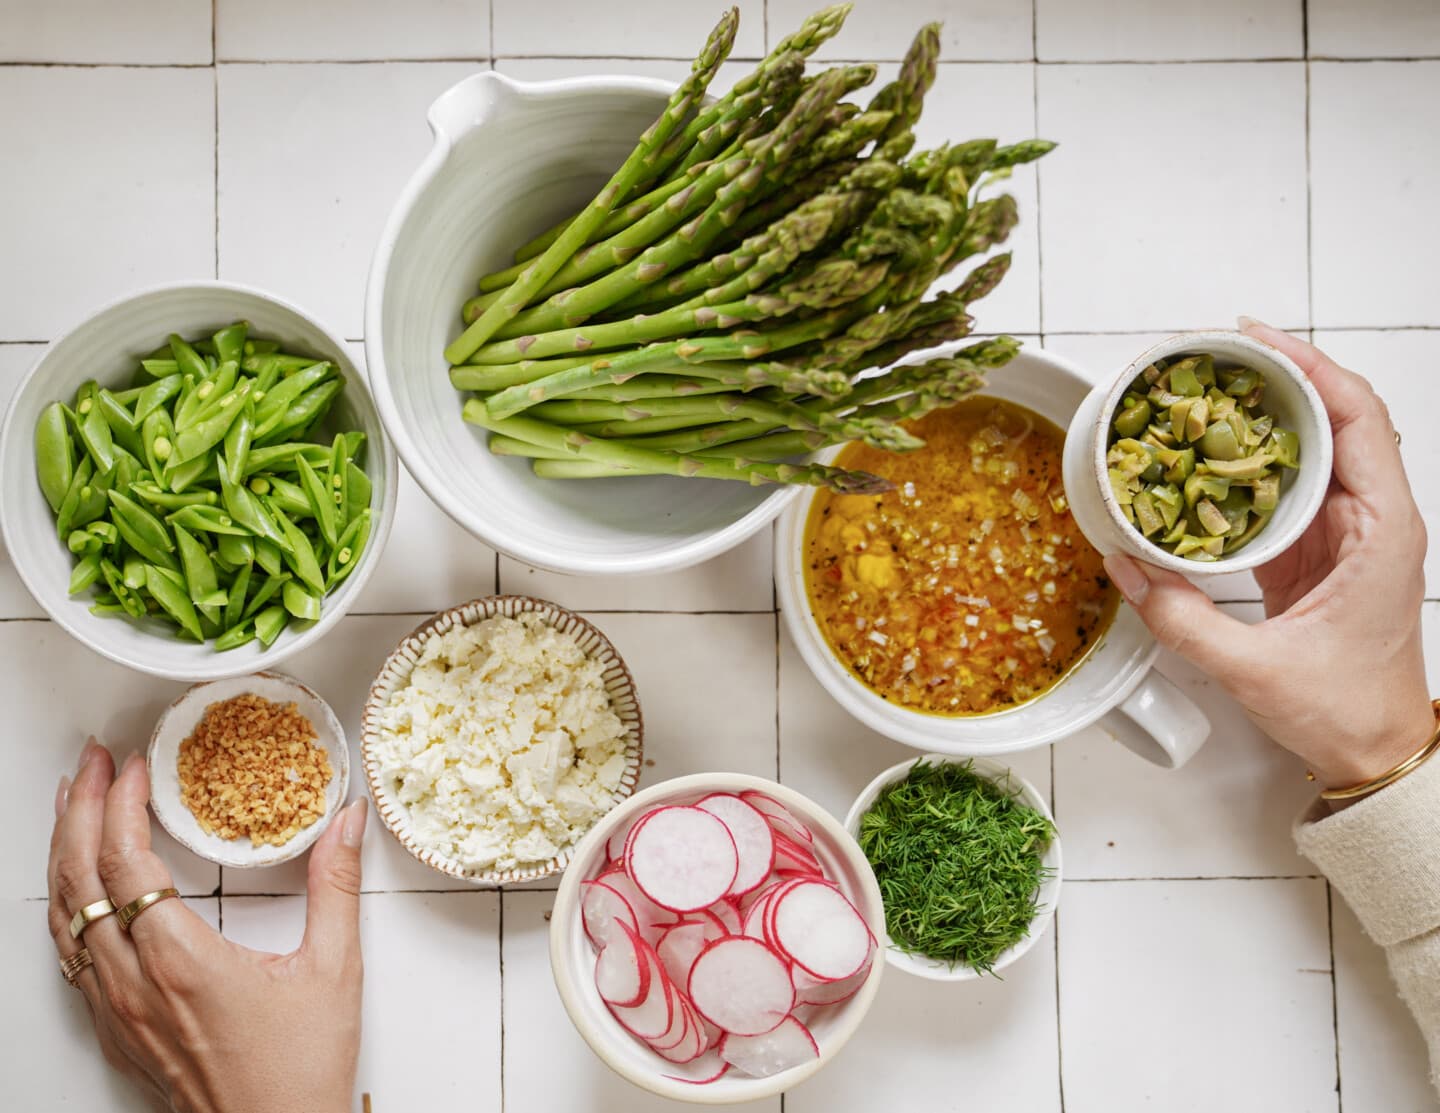 Ingredients for asparagus salad